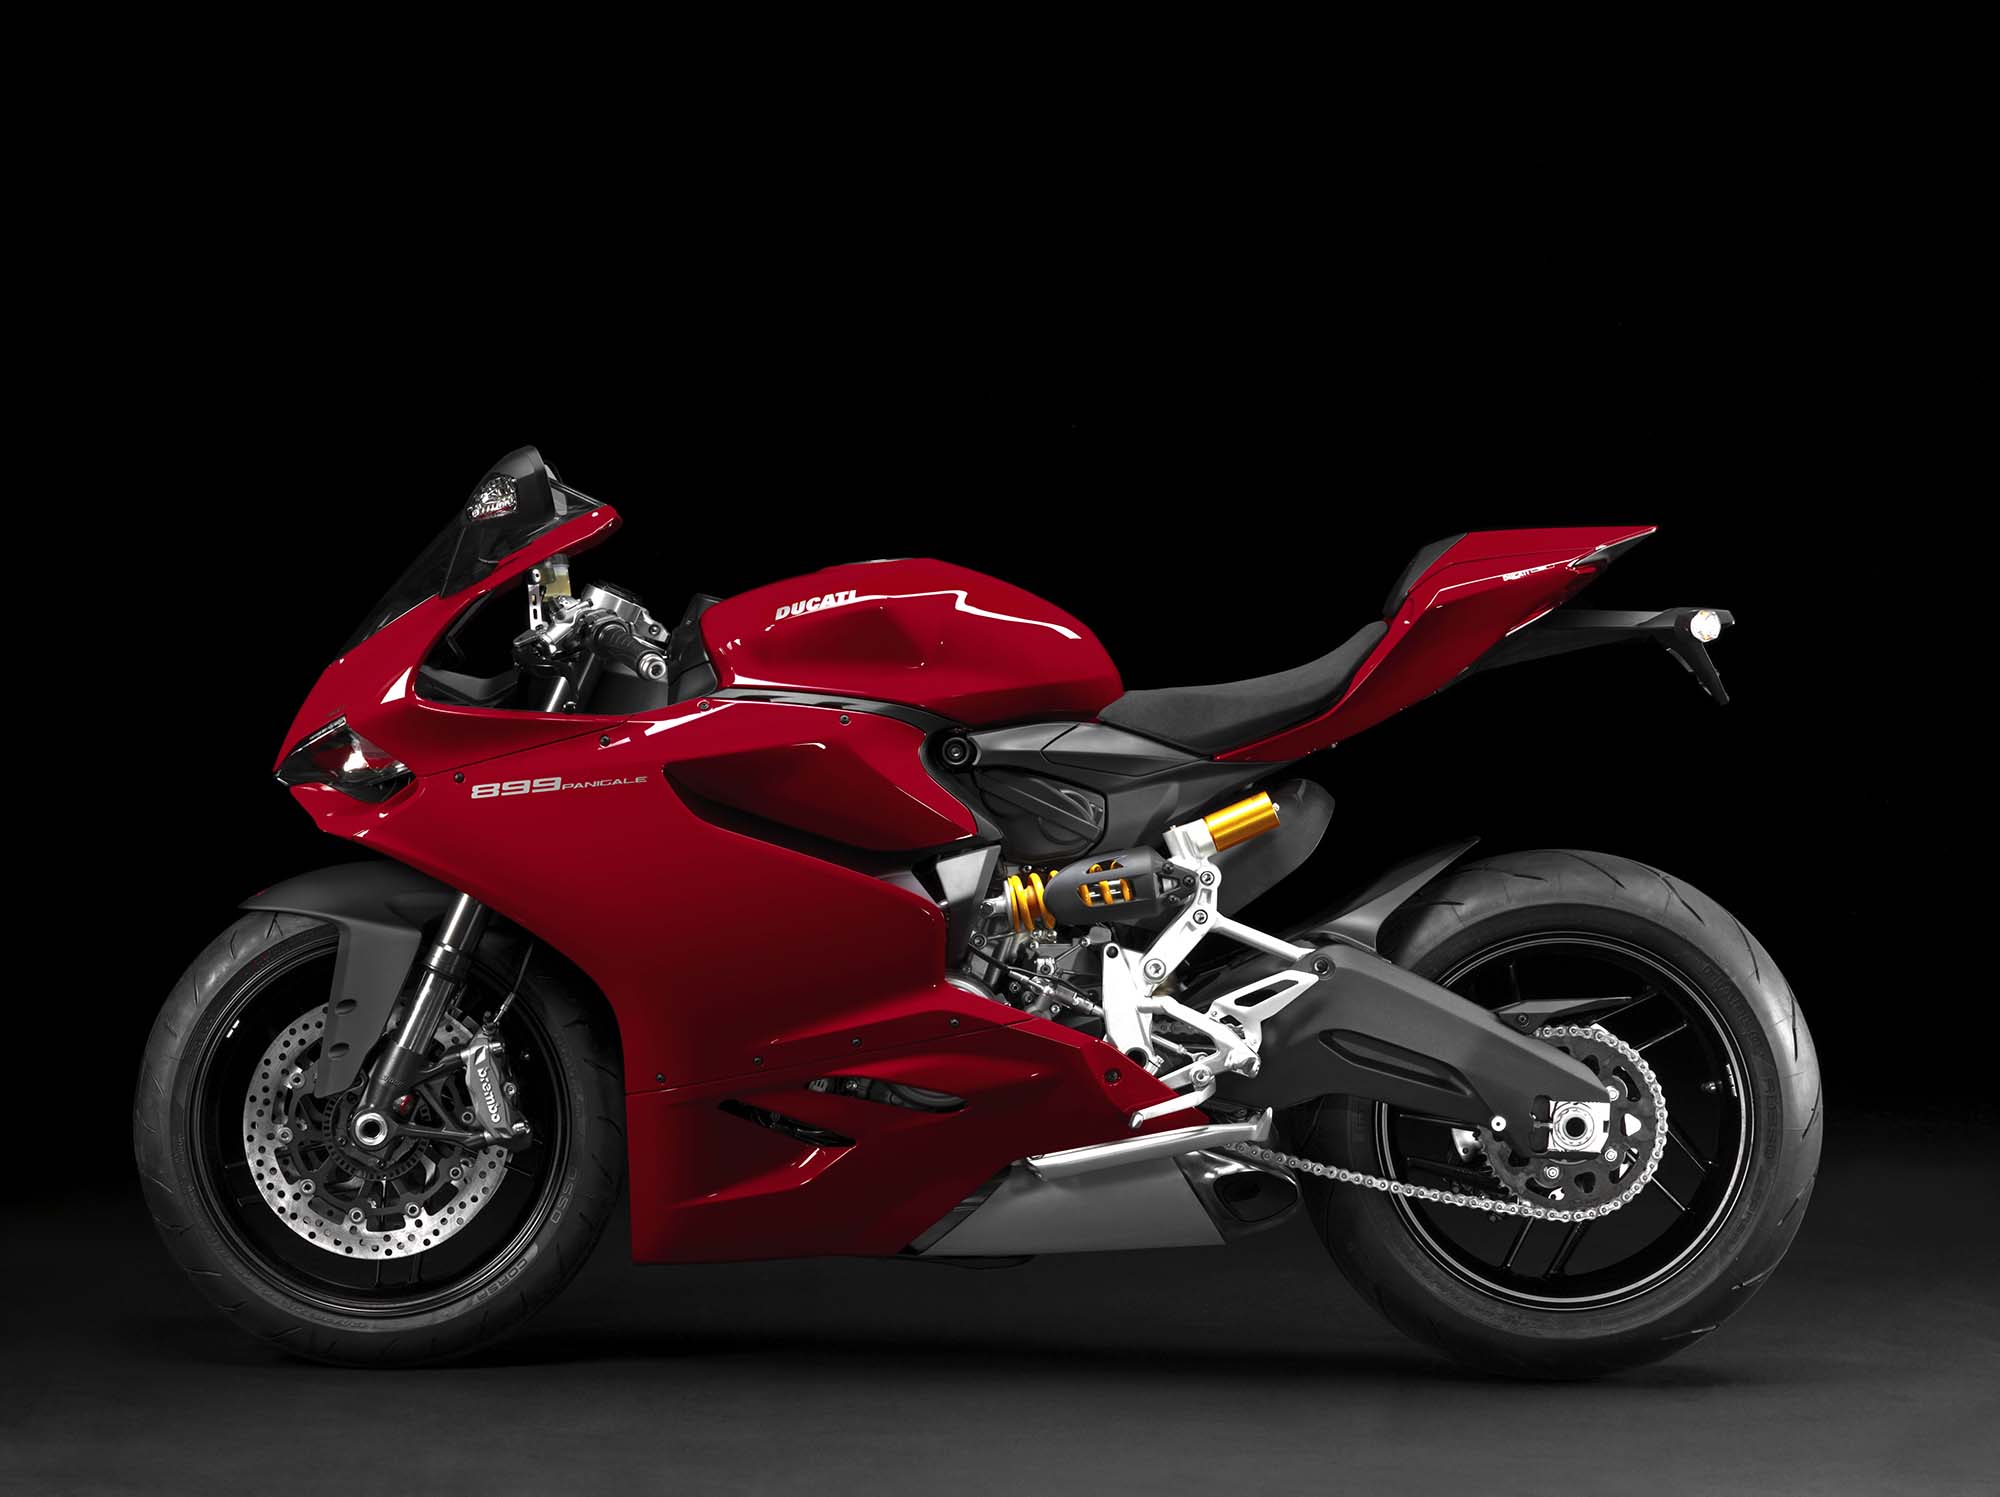 2014 Ducati 899 Panigale Mega Gallery - Asphalt & Rubber